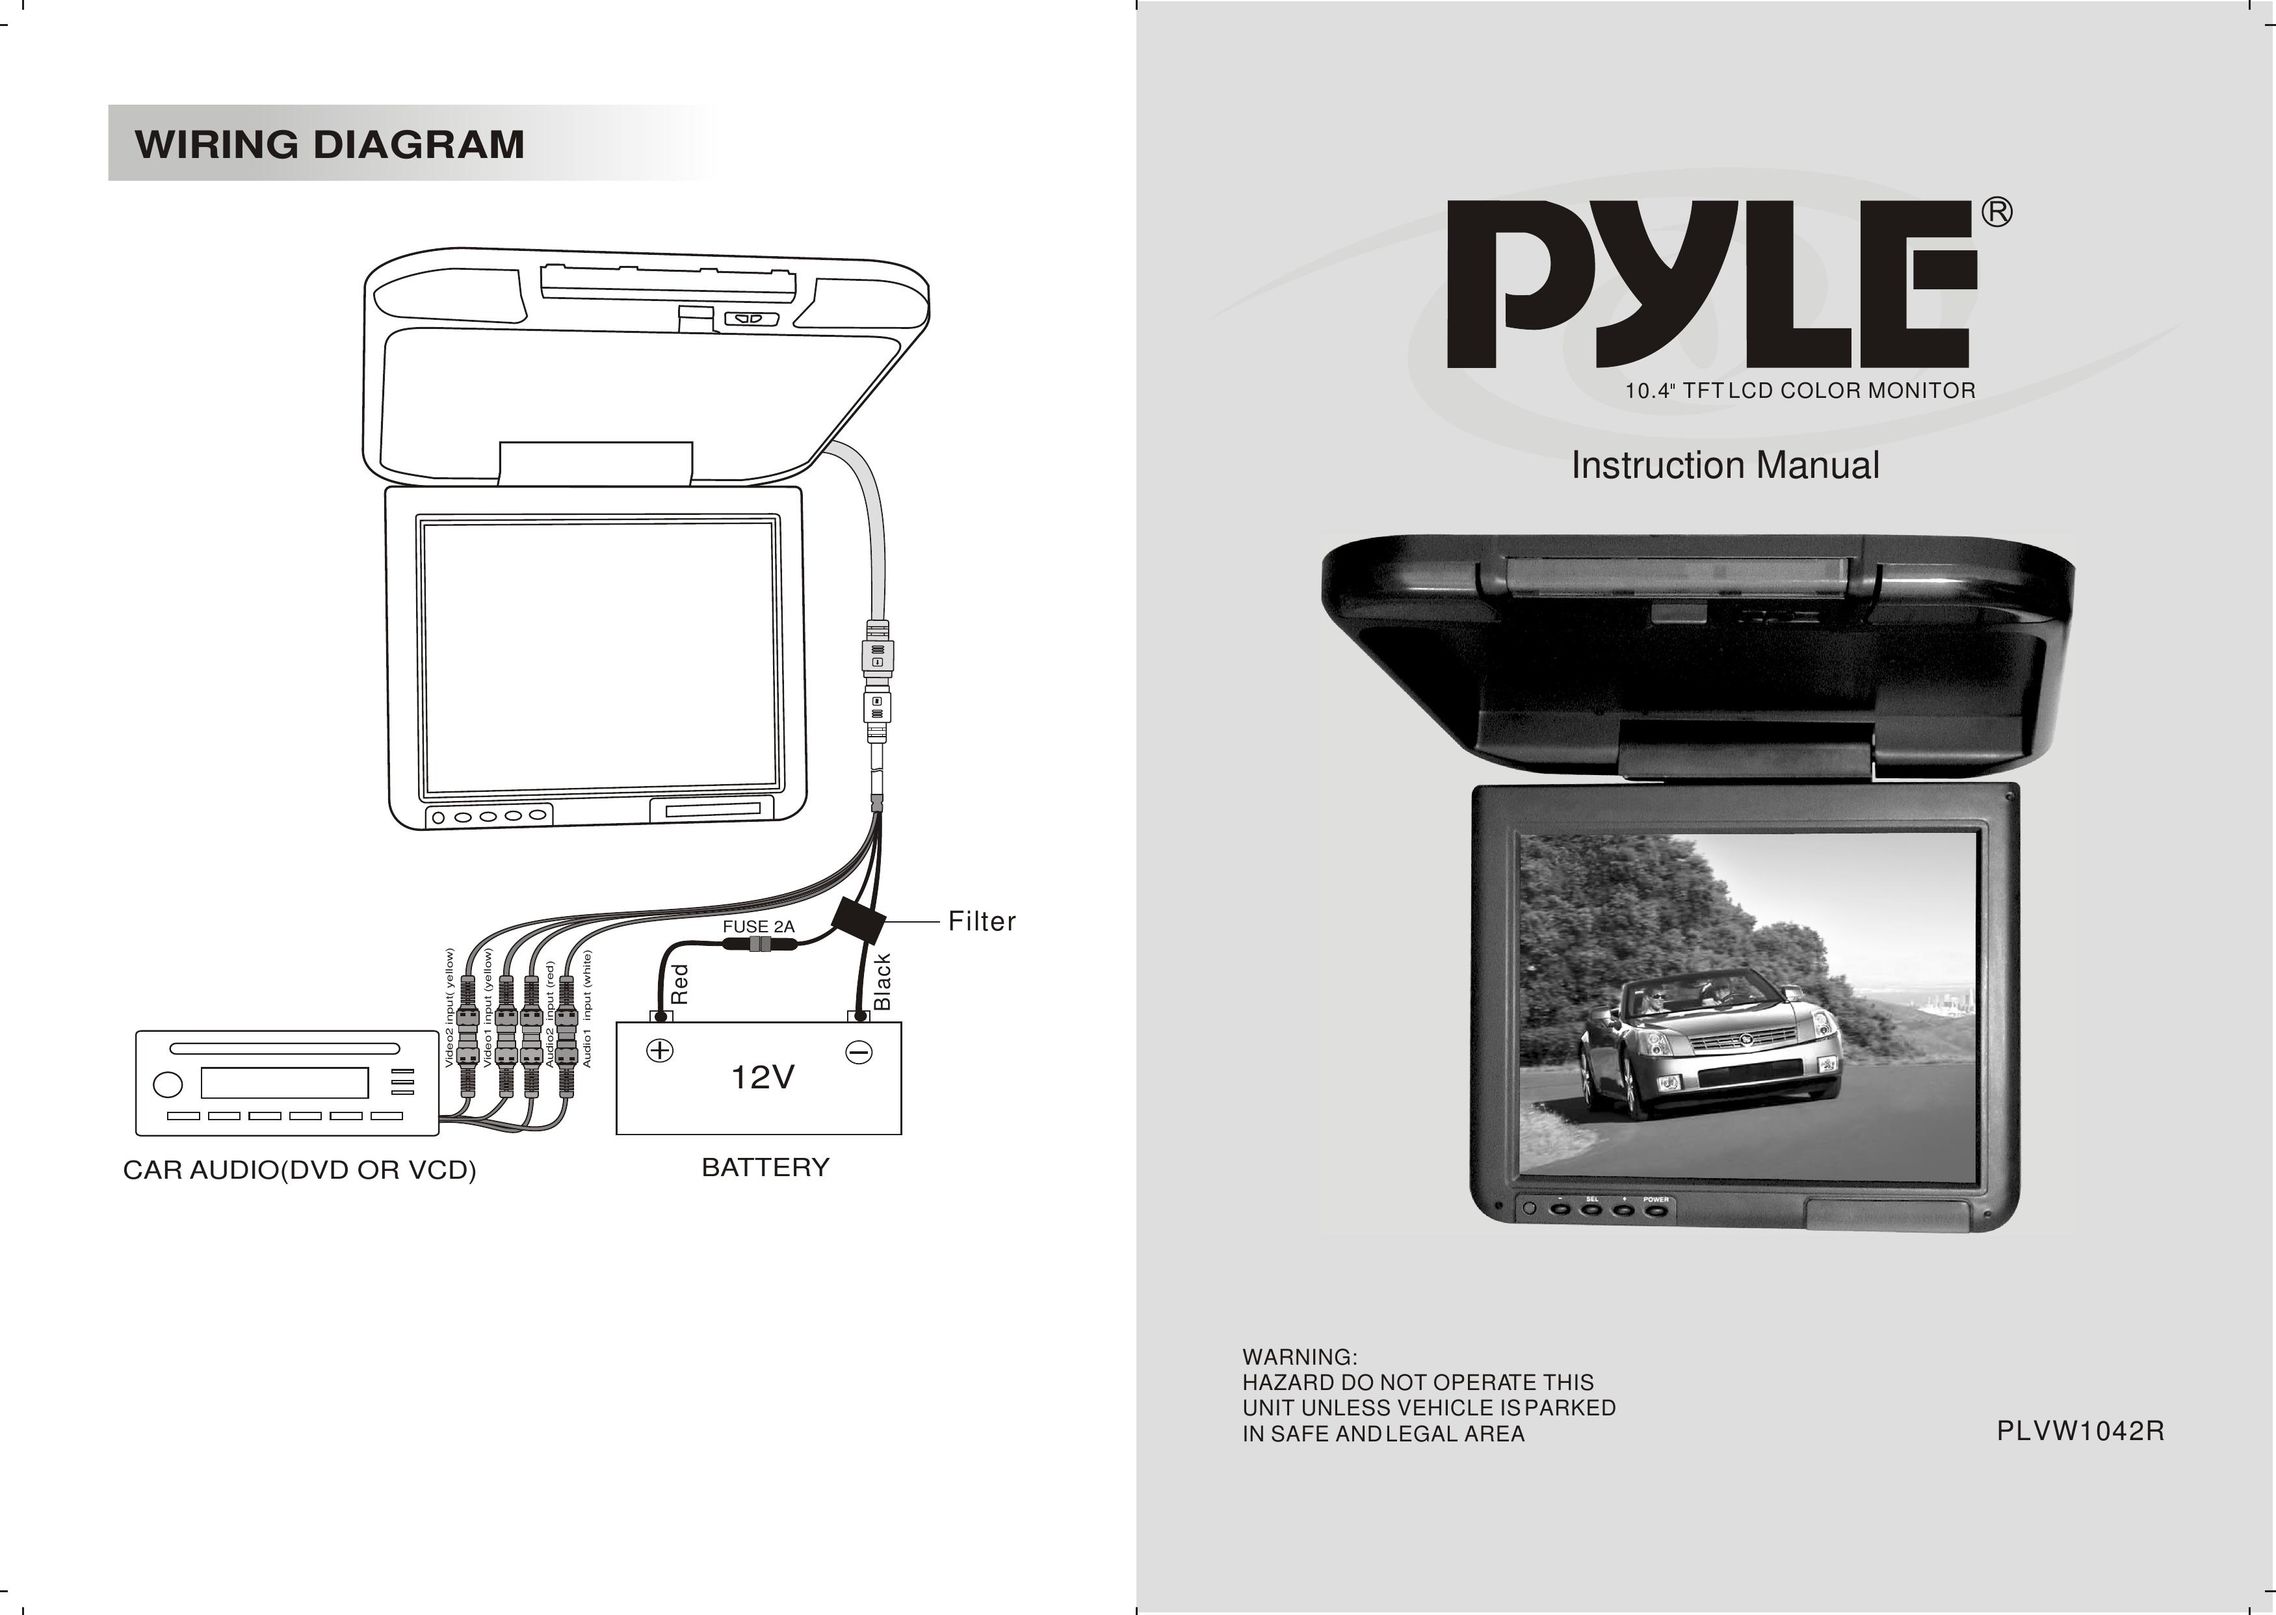 Radio Shack PLWV104 2R Car Video System User Manual